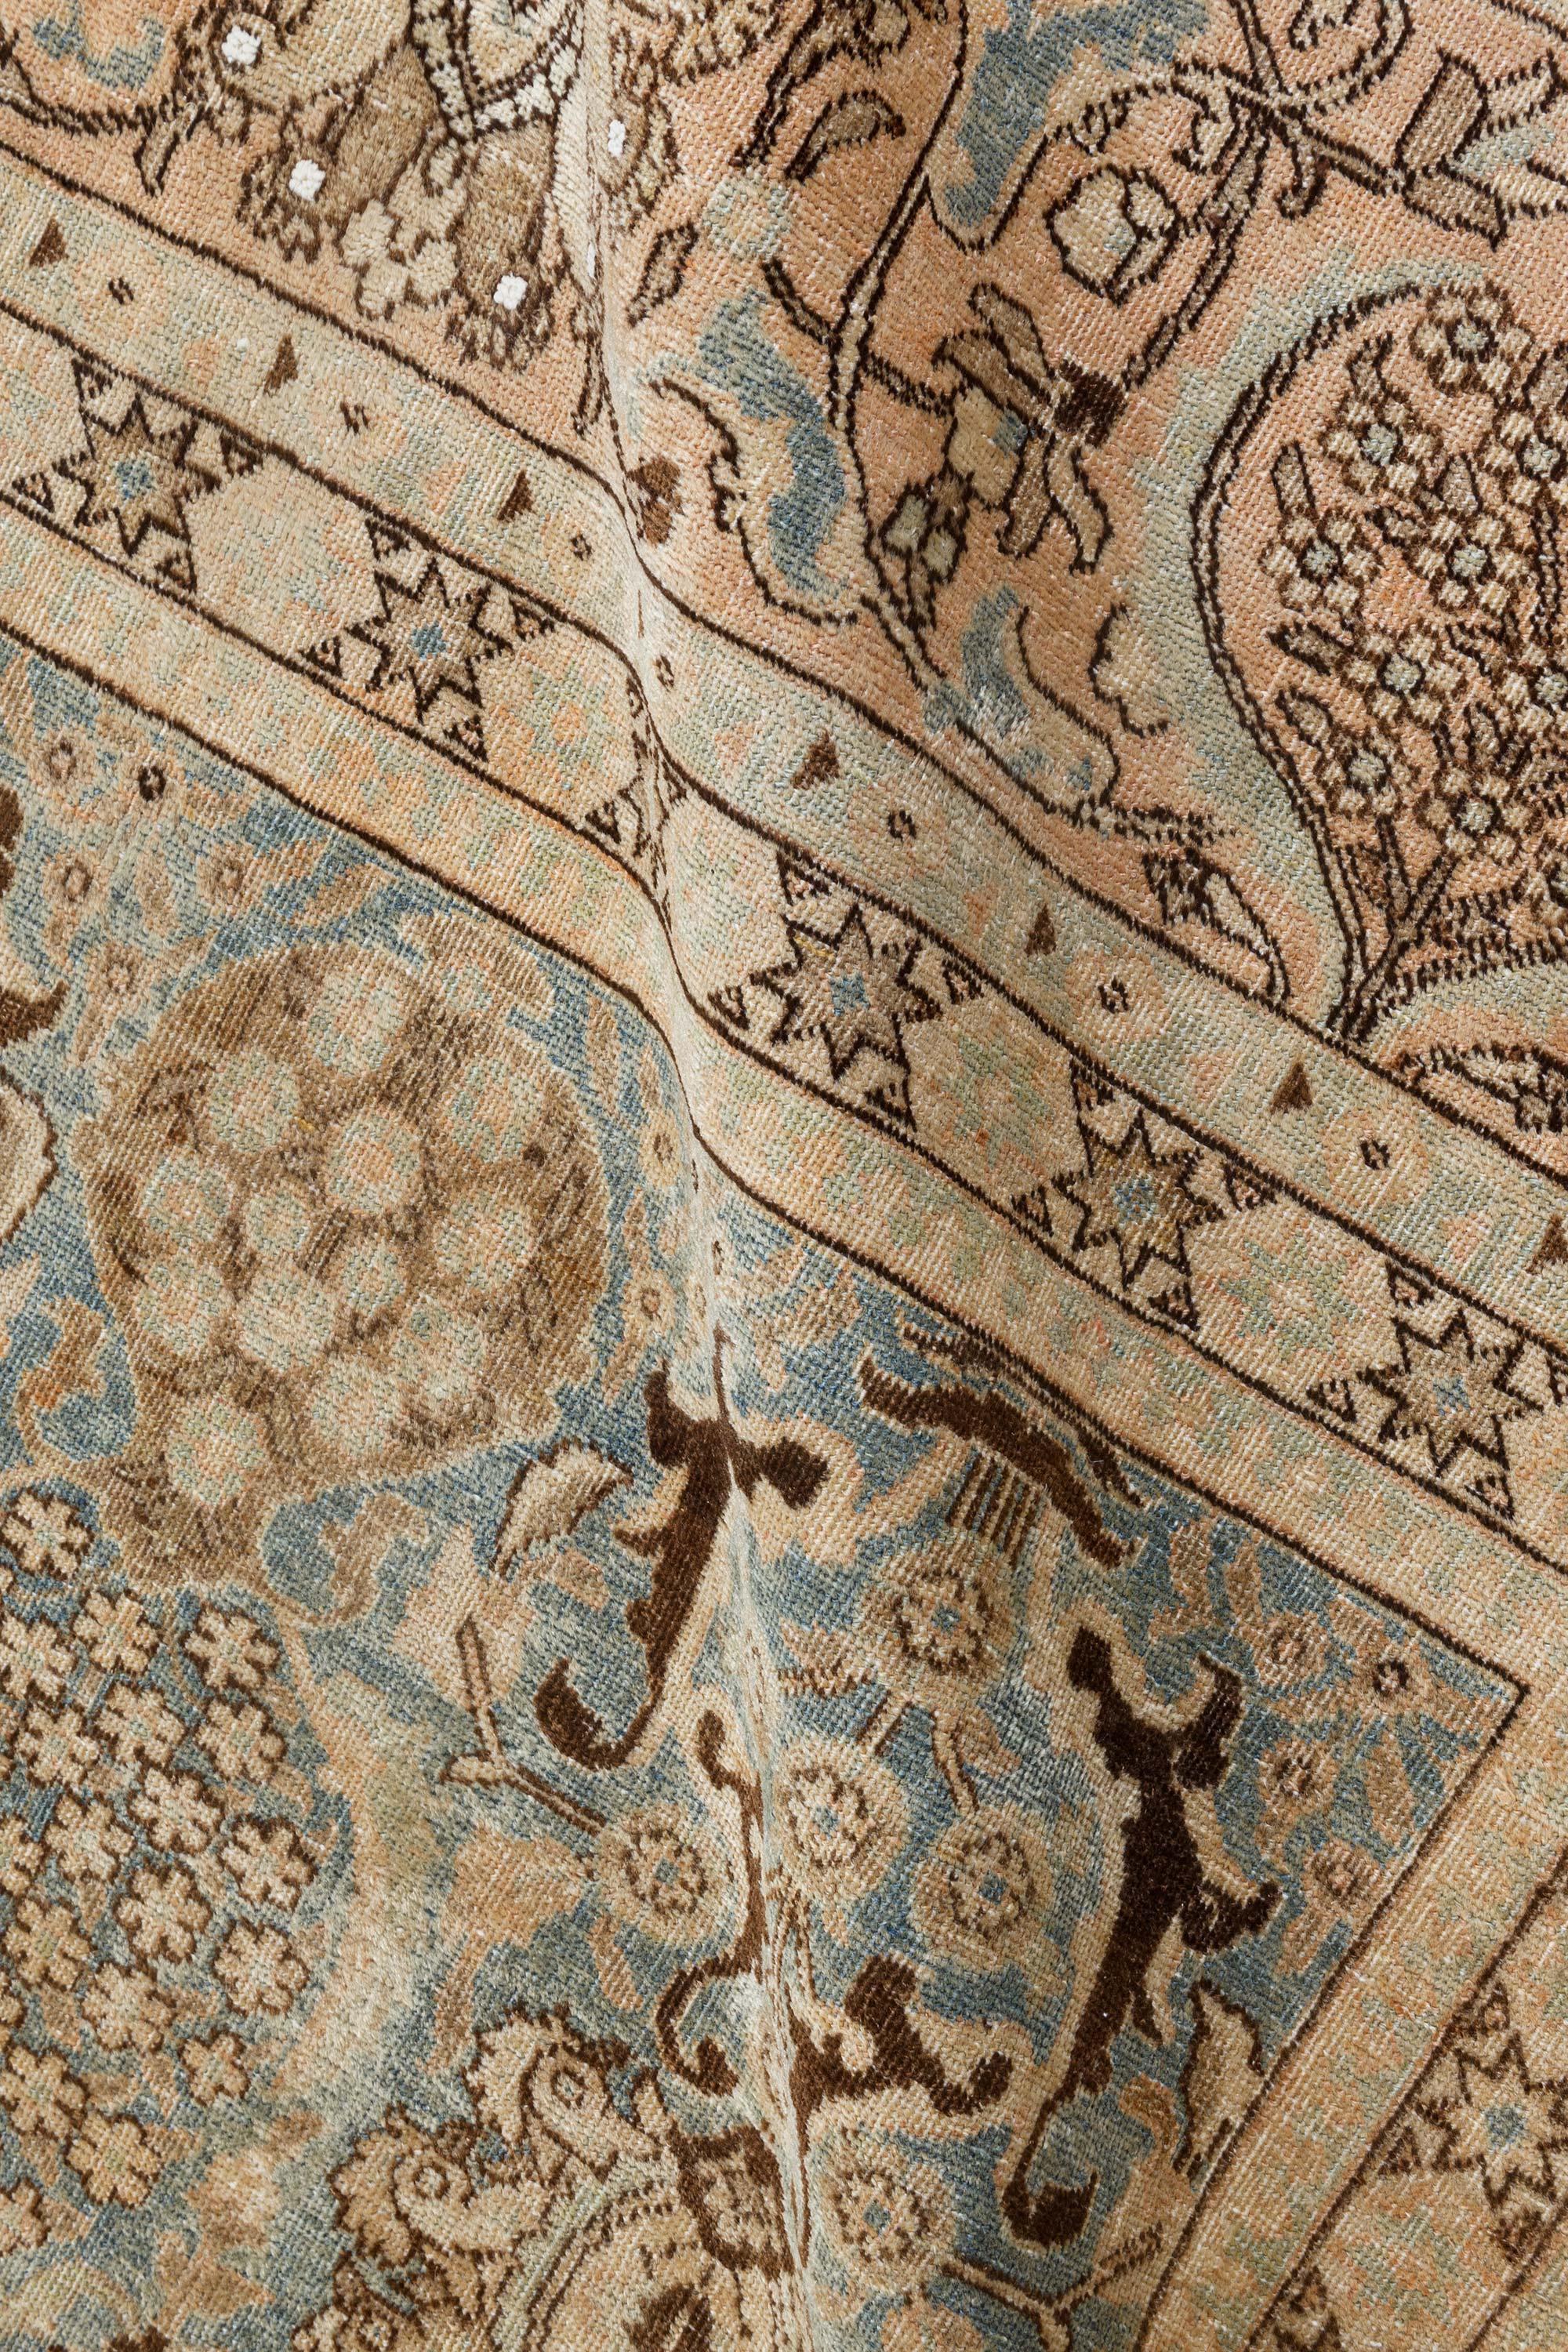 Authentic 19th Century Persian Tabriz Handmade Wool Rug
Size: 11'0